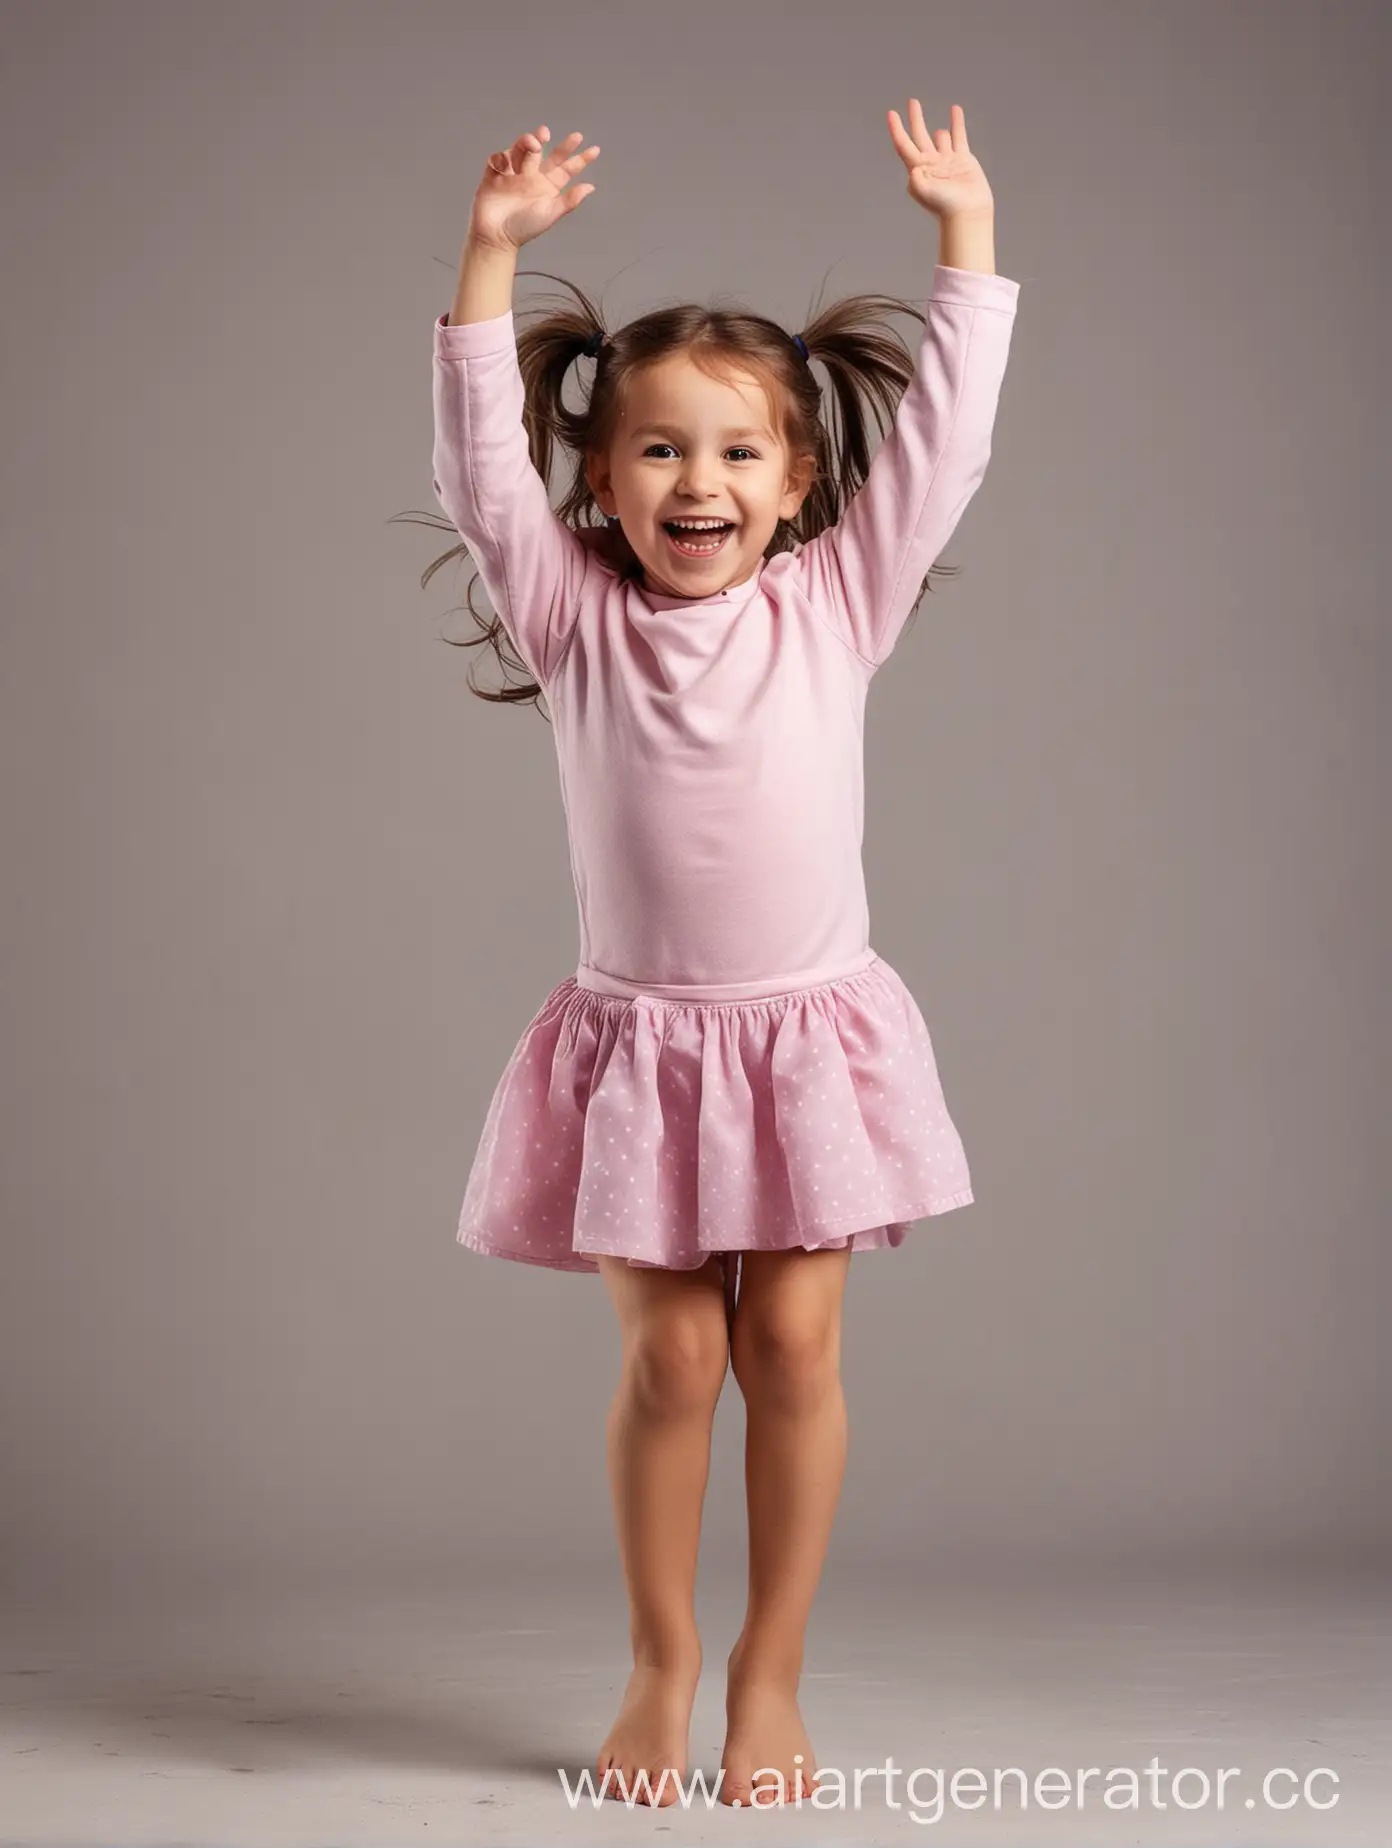 Joyful-4YearOld-Girl-Jumping-with-Excitement